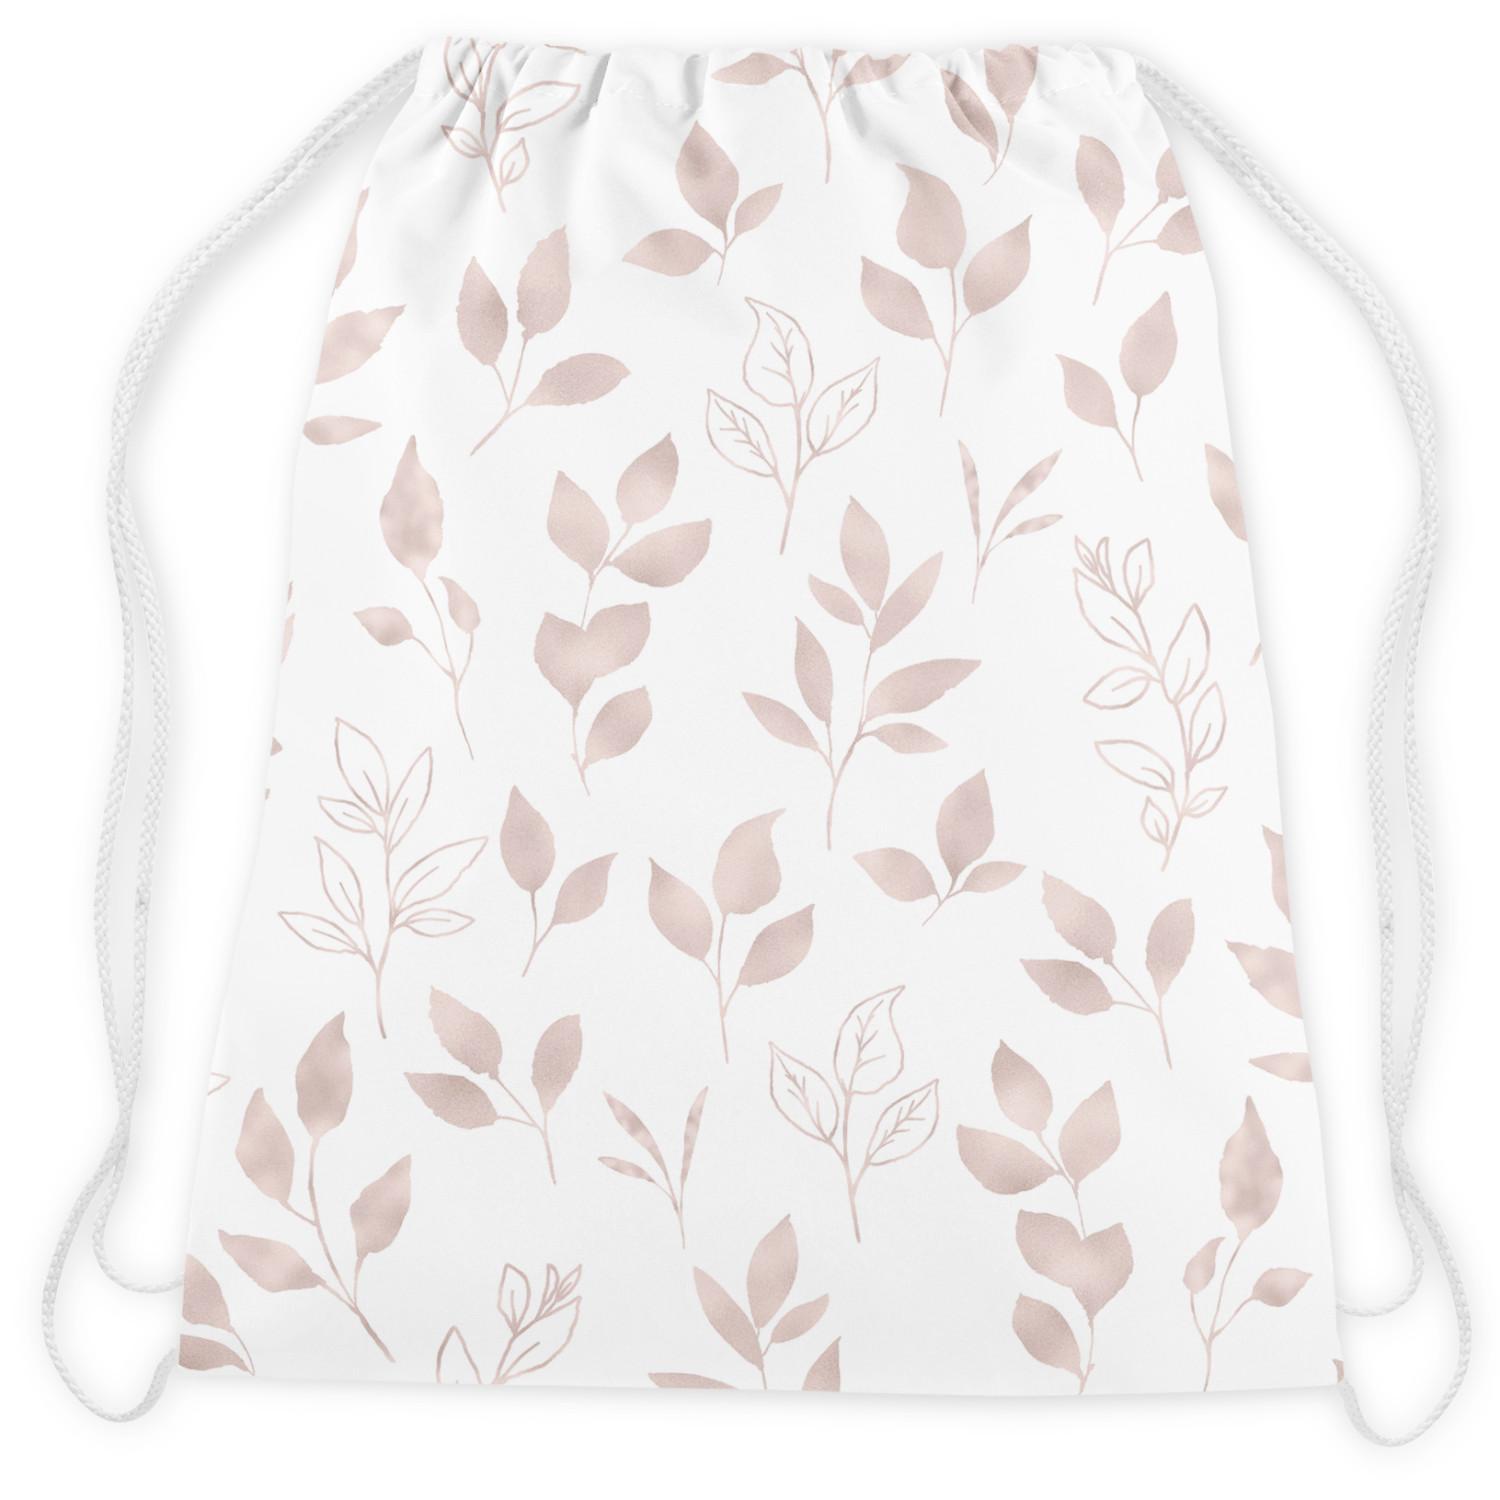 Mochila Subtle foliage - a minimalist floral pattern on white background